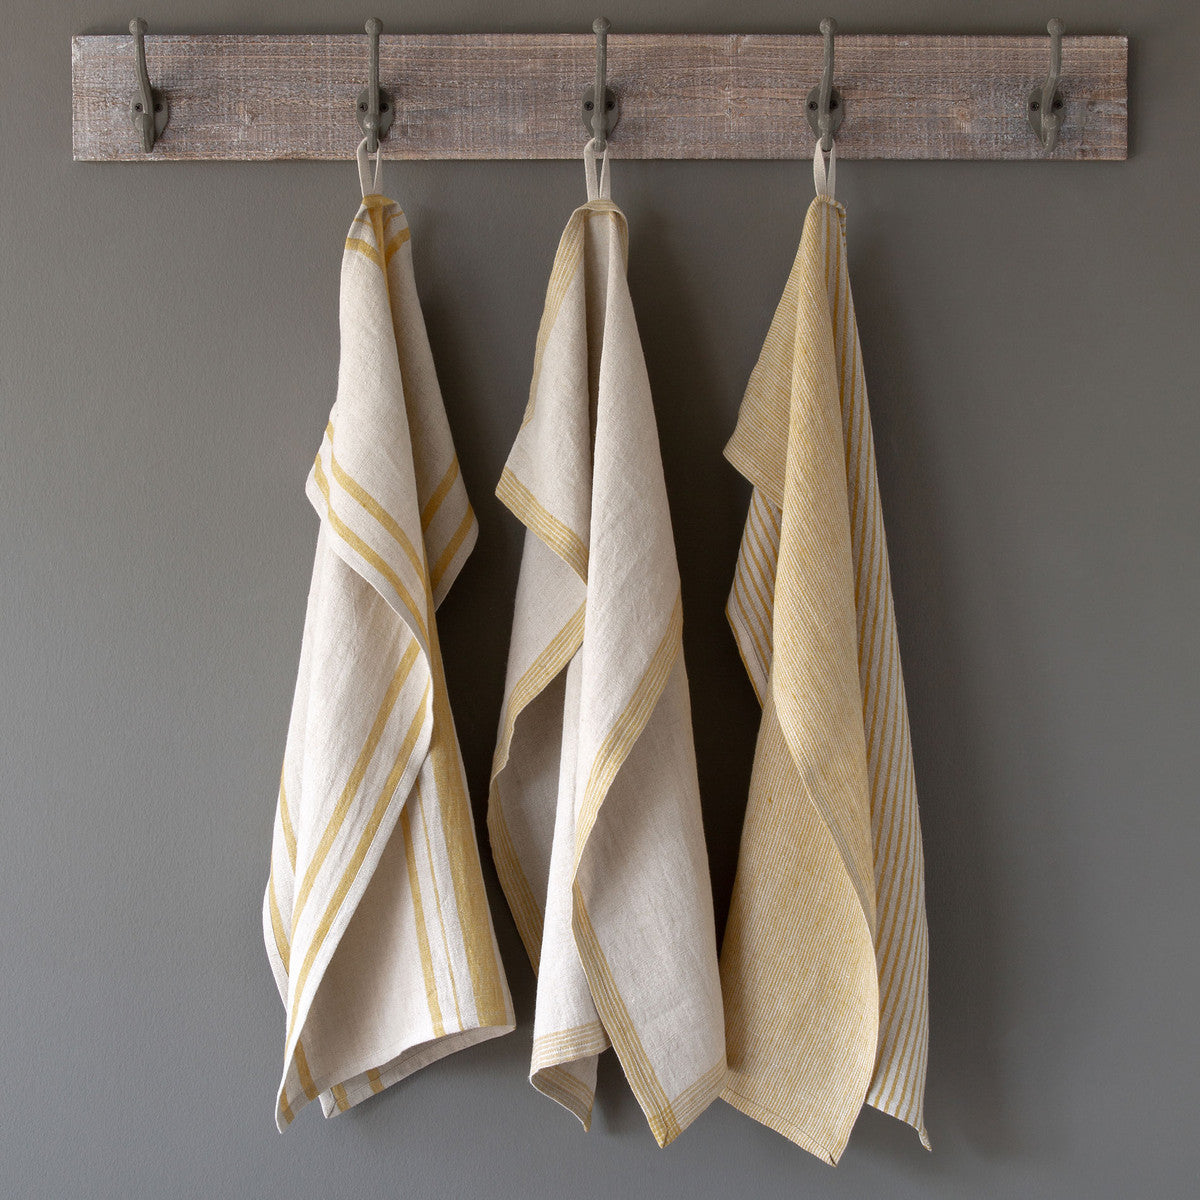 three soft linen yellow dish towels hanging on rustic rack